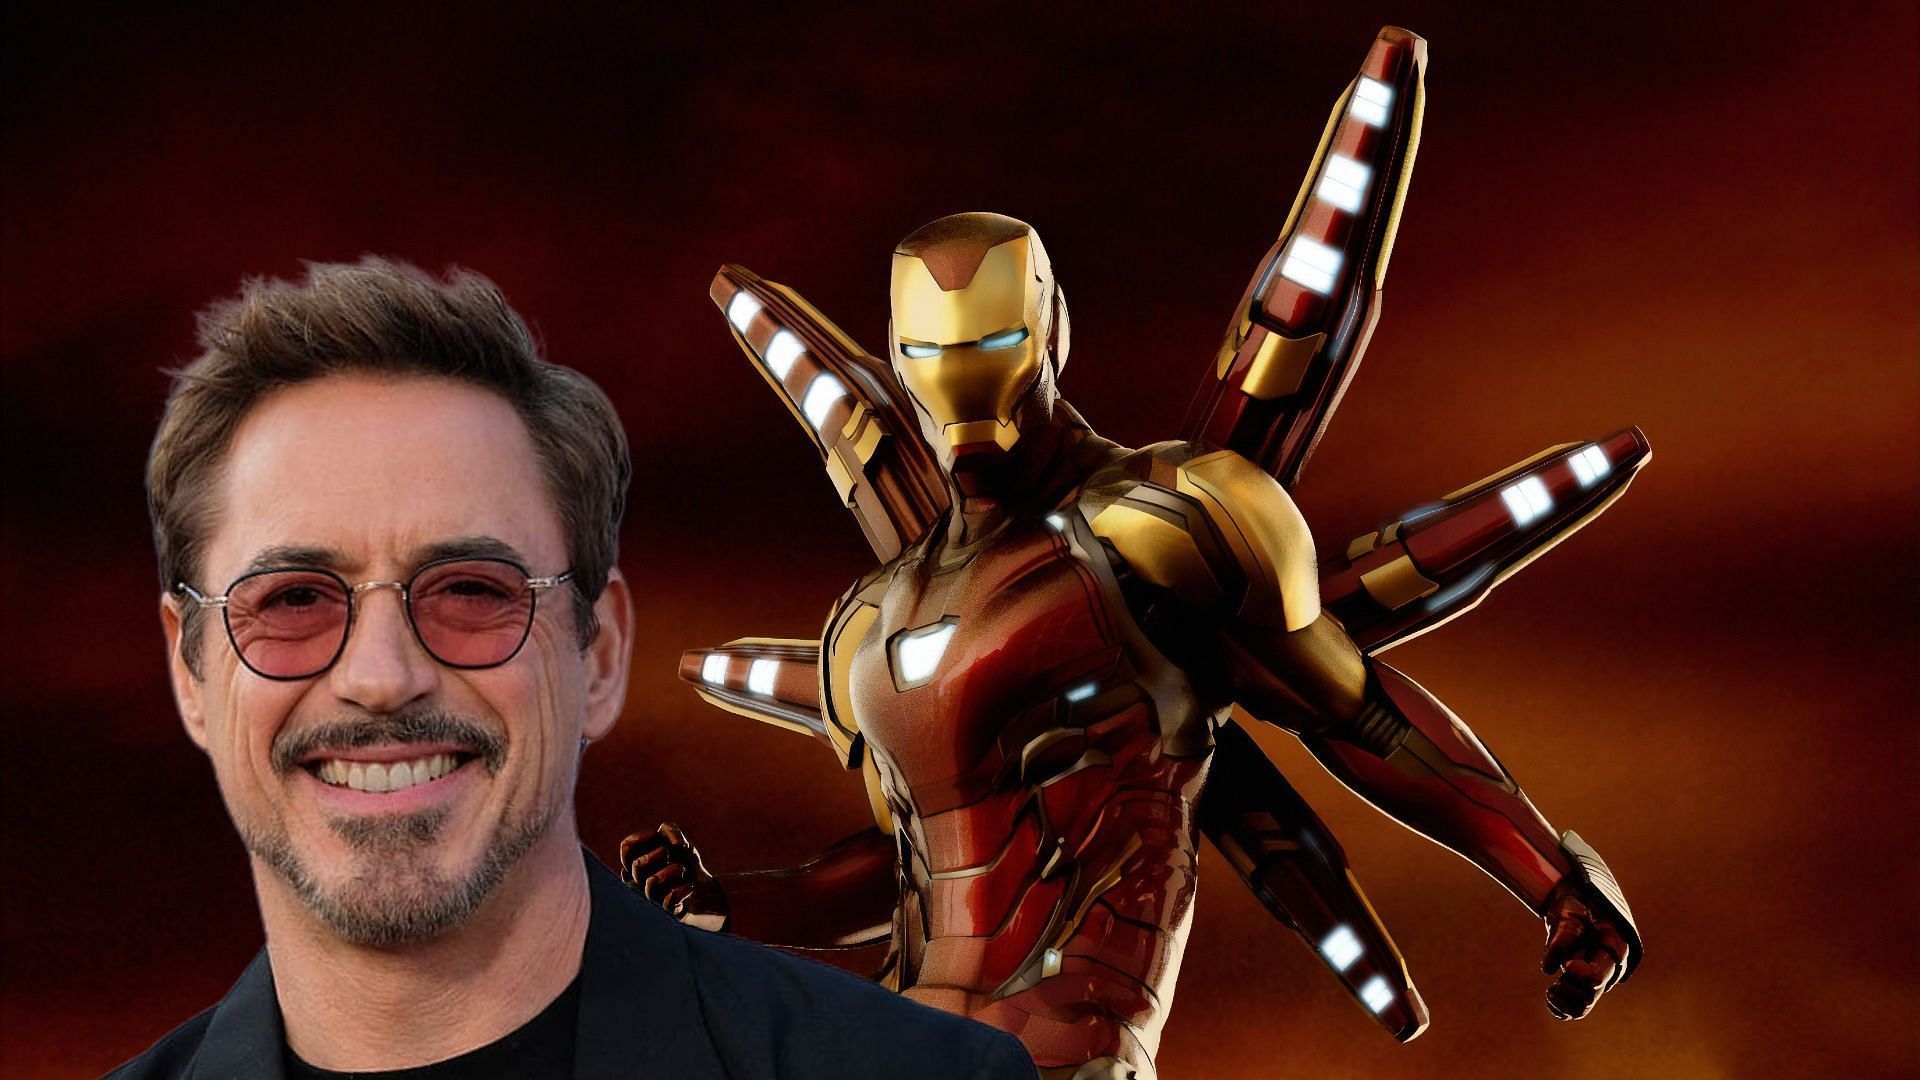 Robert Downey Jr on Iron Man Return Offers: Marvel Acting Went